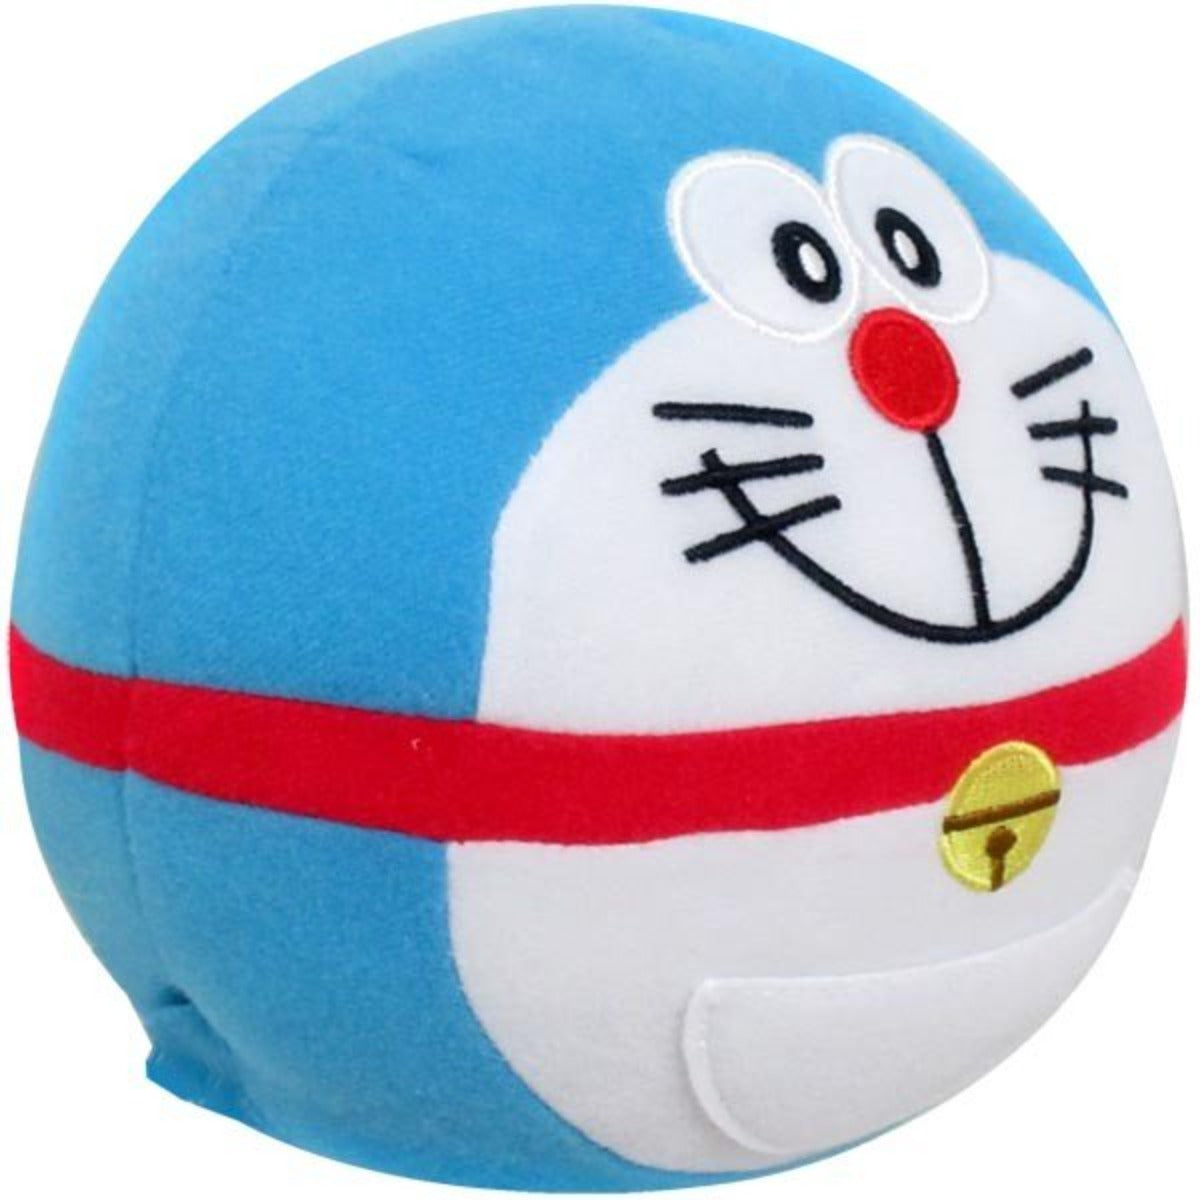 Doraemon Plush Jumping Egg (Japan Edition)